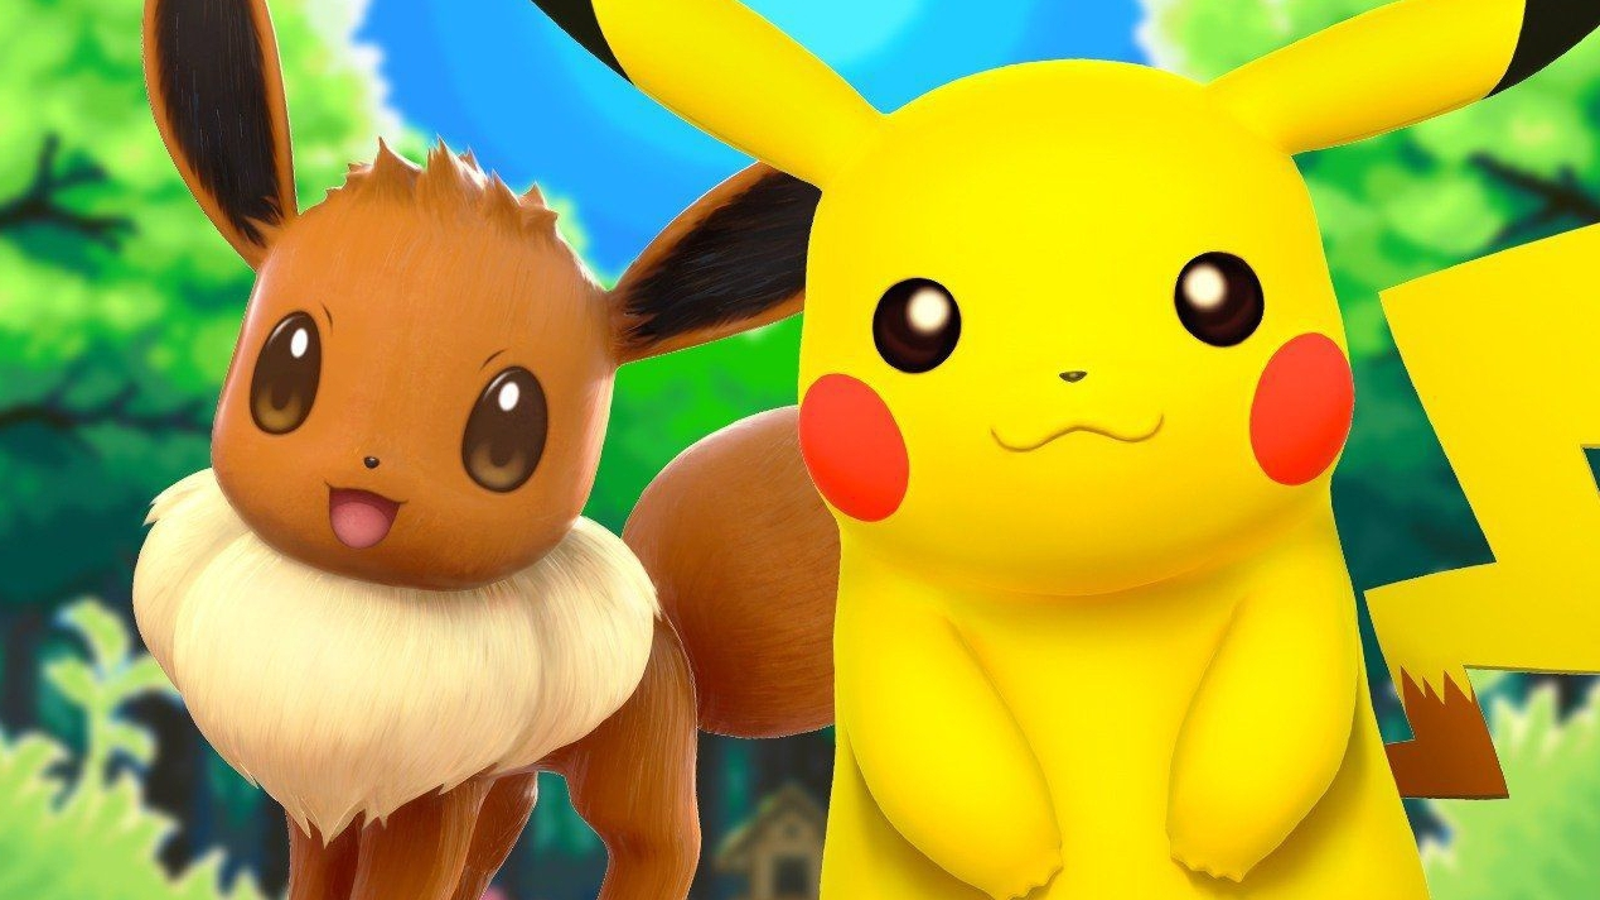 Video: Pokemon: Let's Go, Pikachu / Eevee vs. Pokemon Yellow - Celadon City  graphics comparison